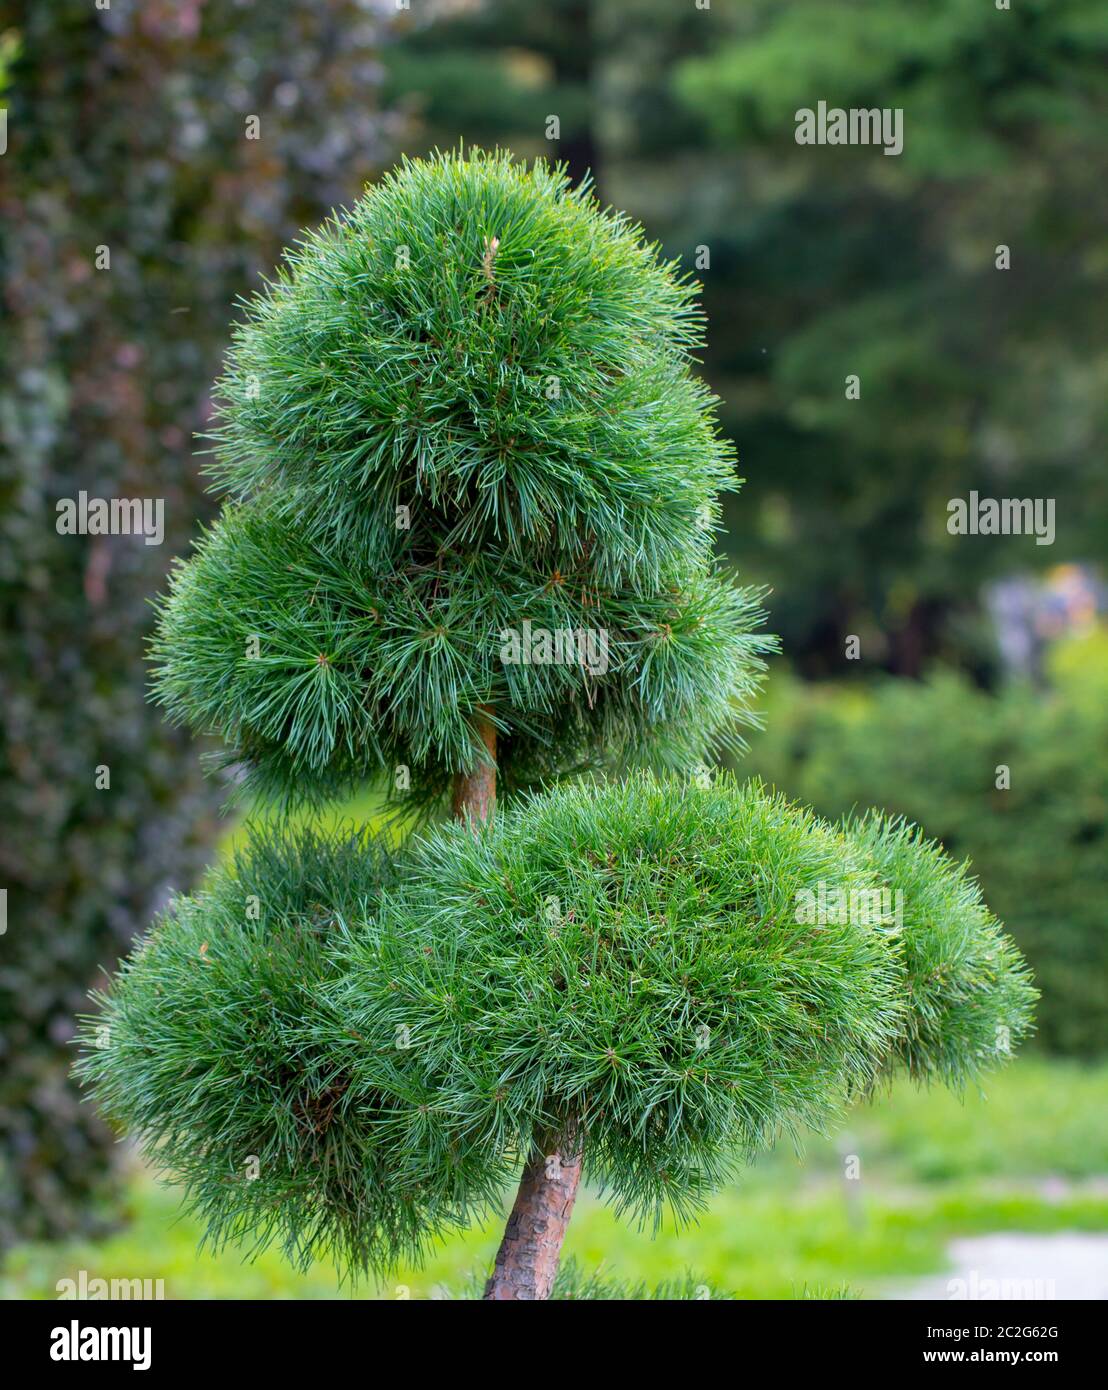 Cultivar dwarf mountain pine Pinus mugo var. pumilio in the rocky garden Stock Photo